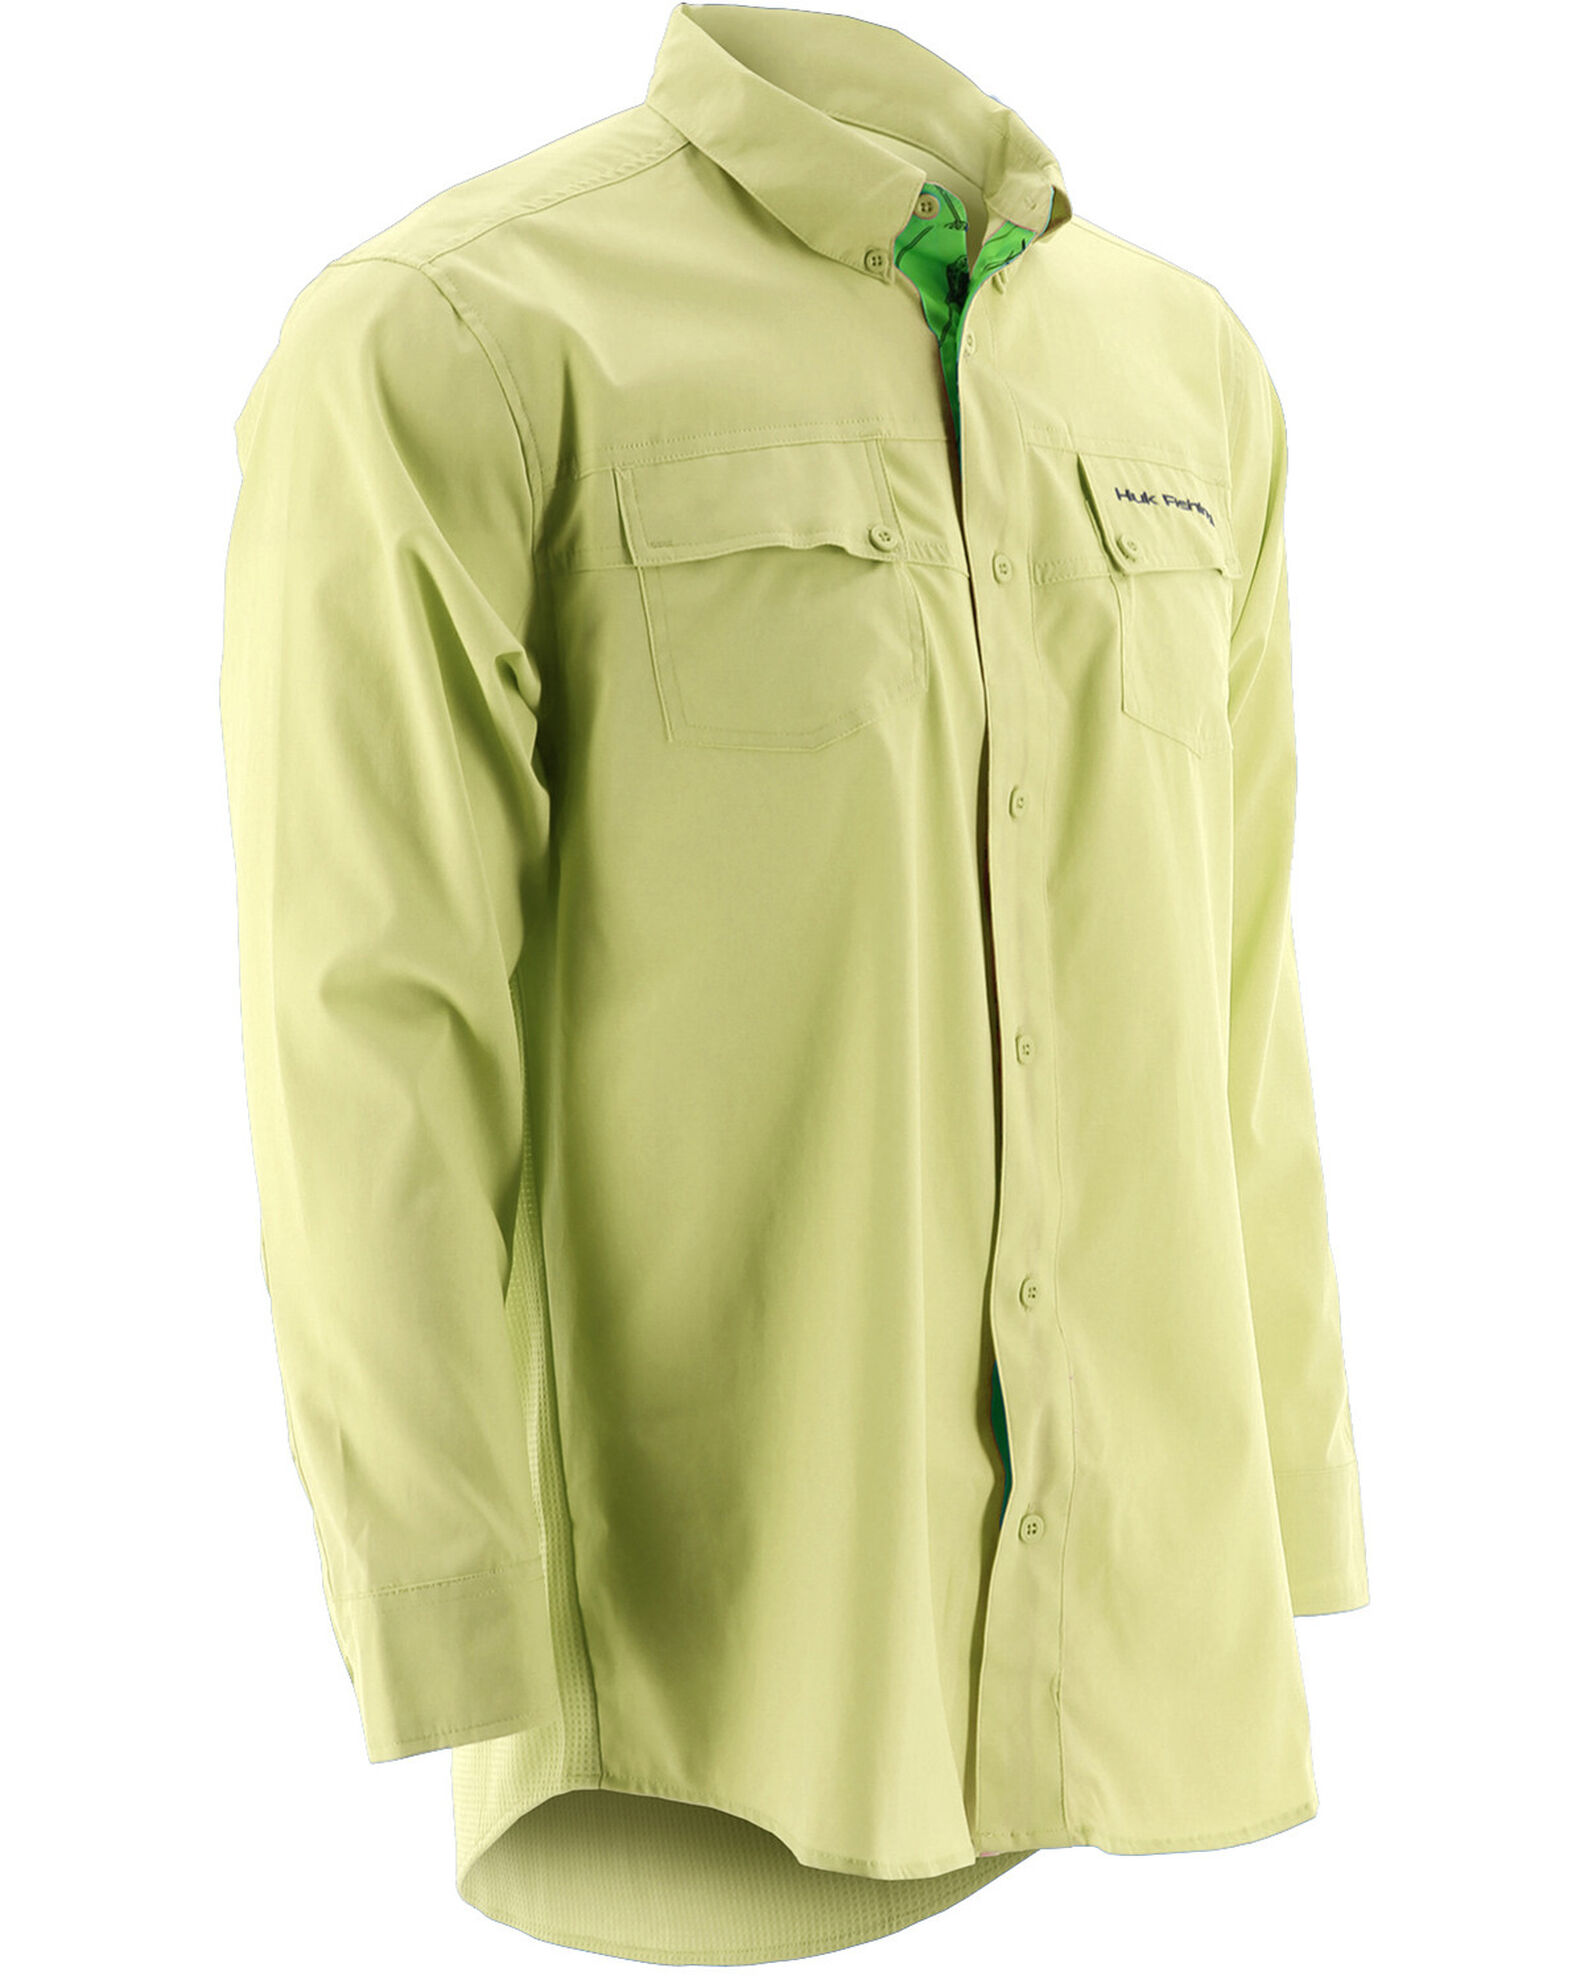 Huk Performance Fishing Men's Phenom Long Sleeve Shirt - Country Outfitter